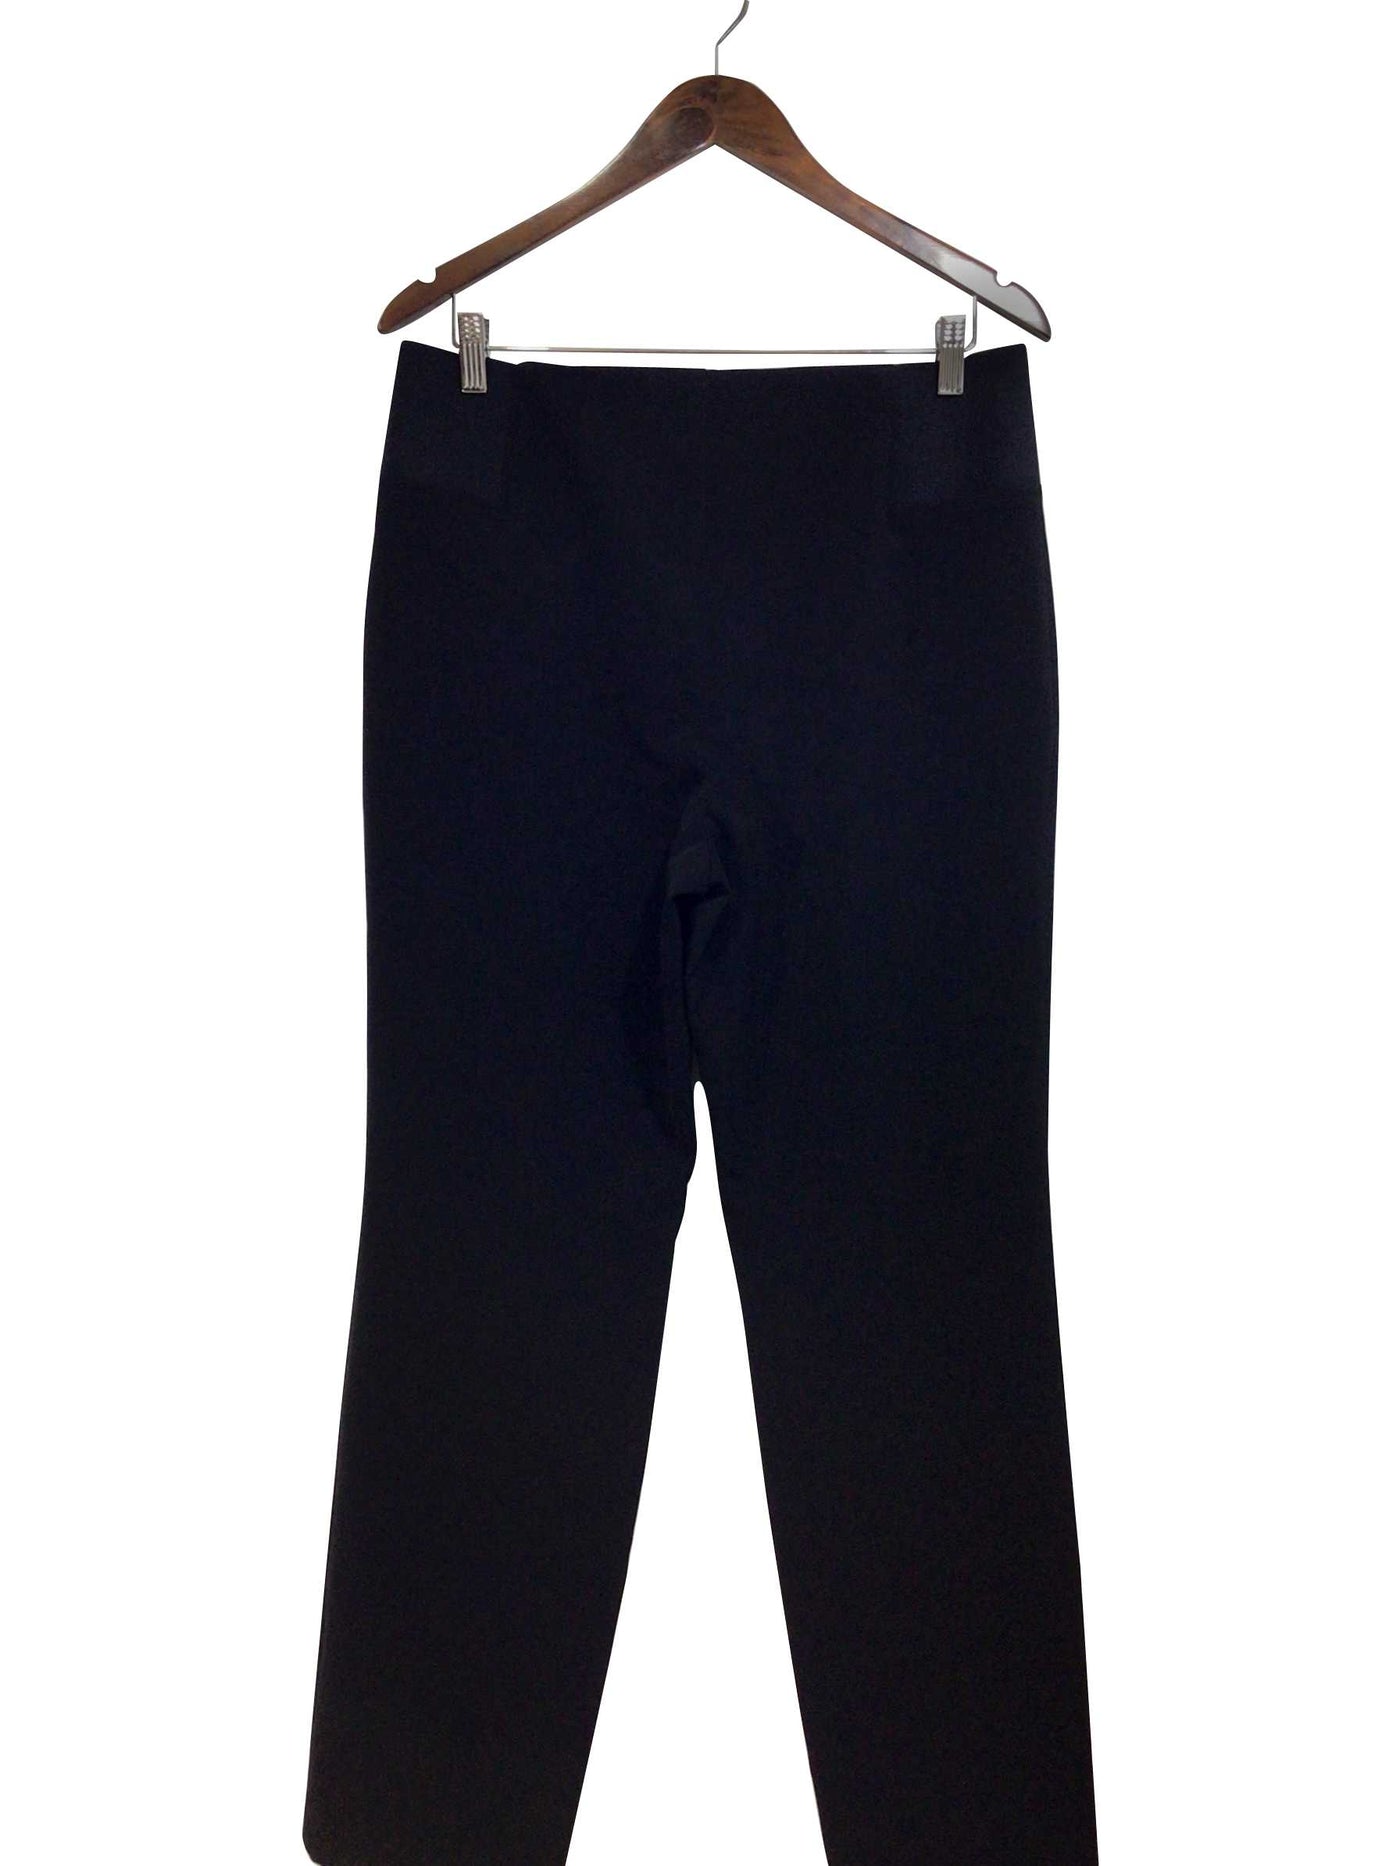 TANJAY Regular fit Pant in Black  -  12  9.99 Koop